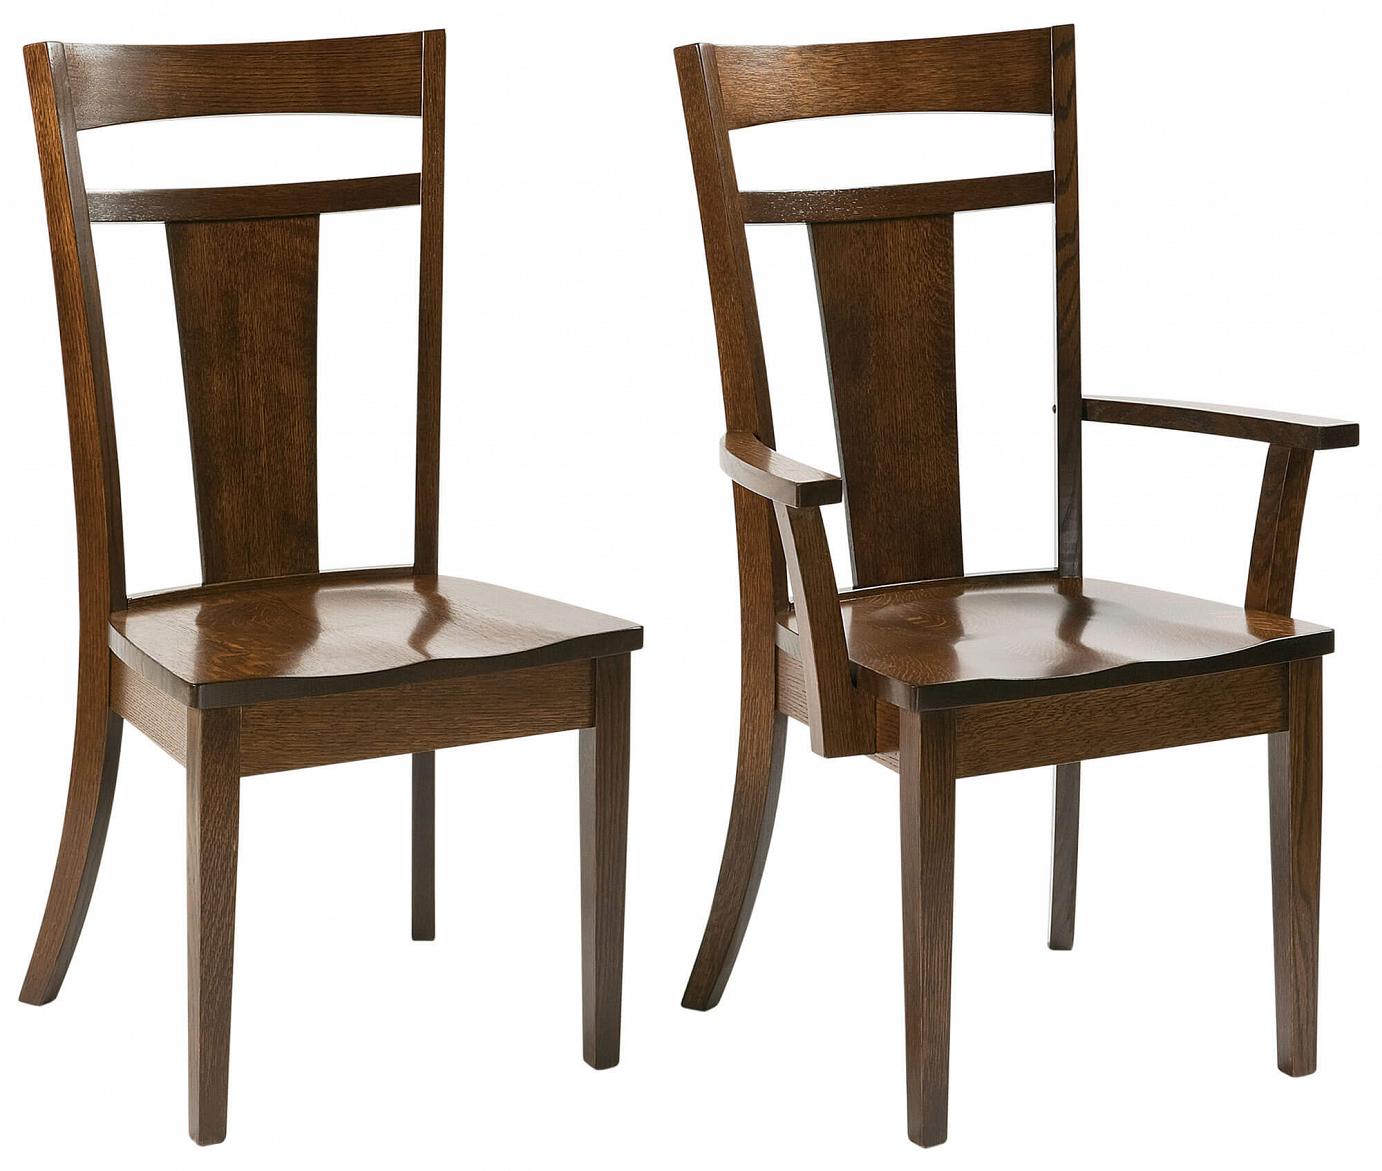 RH Yoder Livingston Chairs